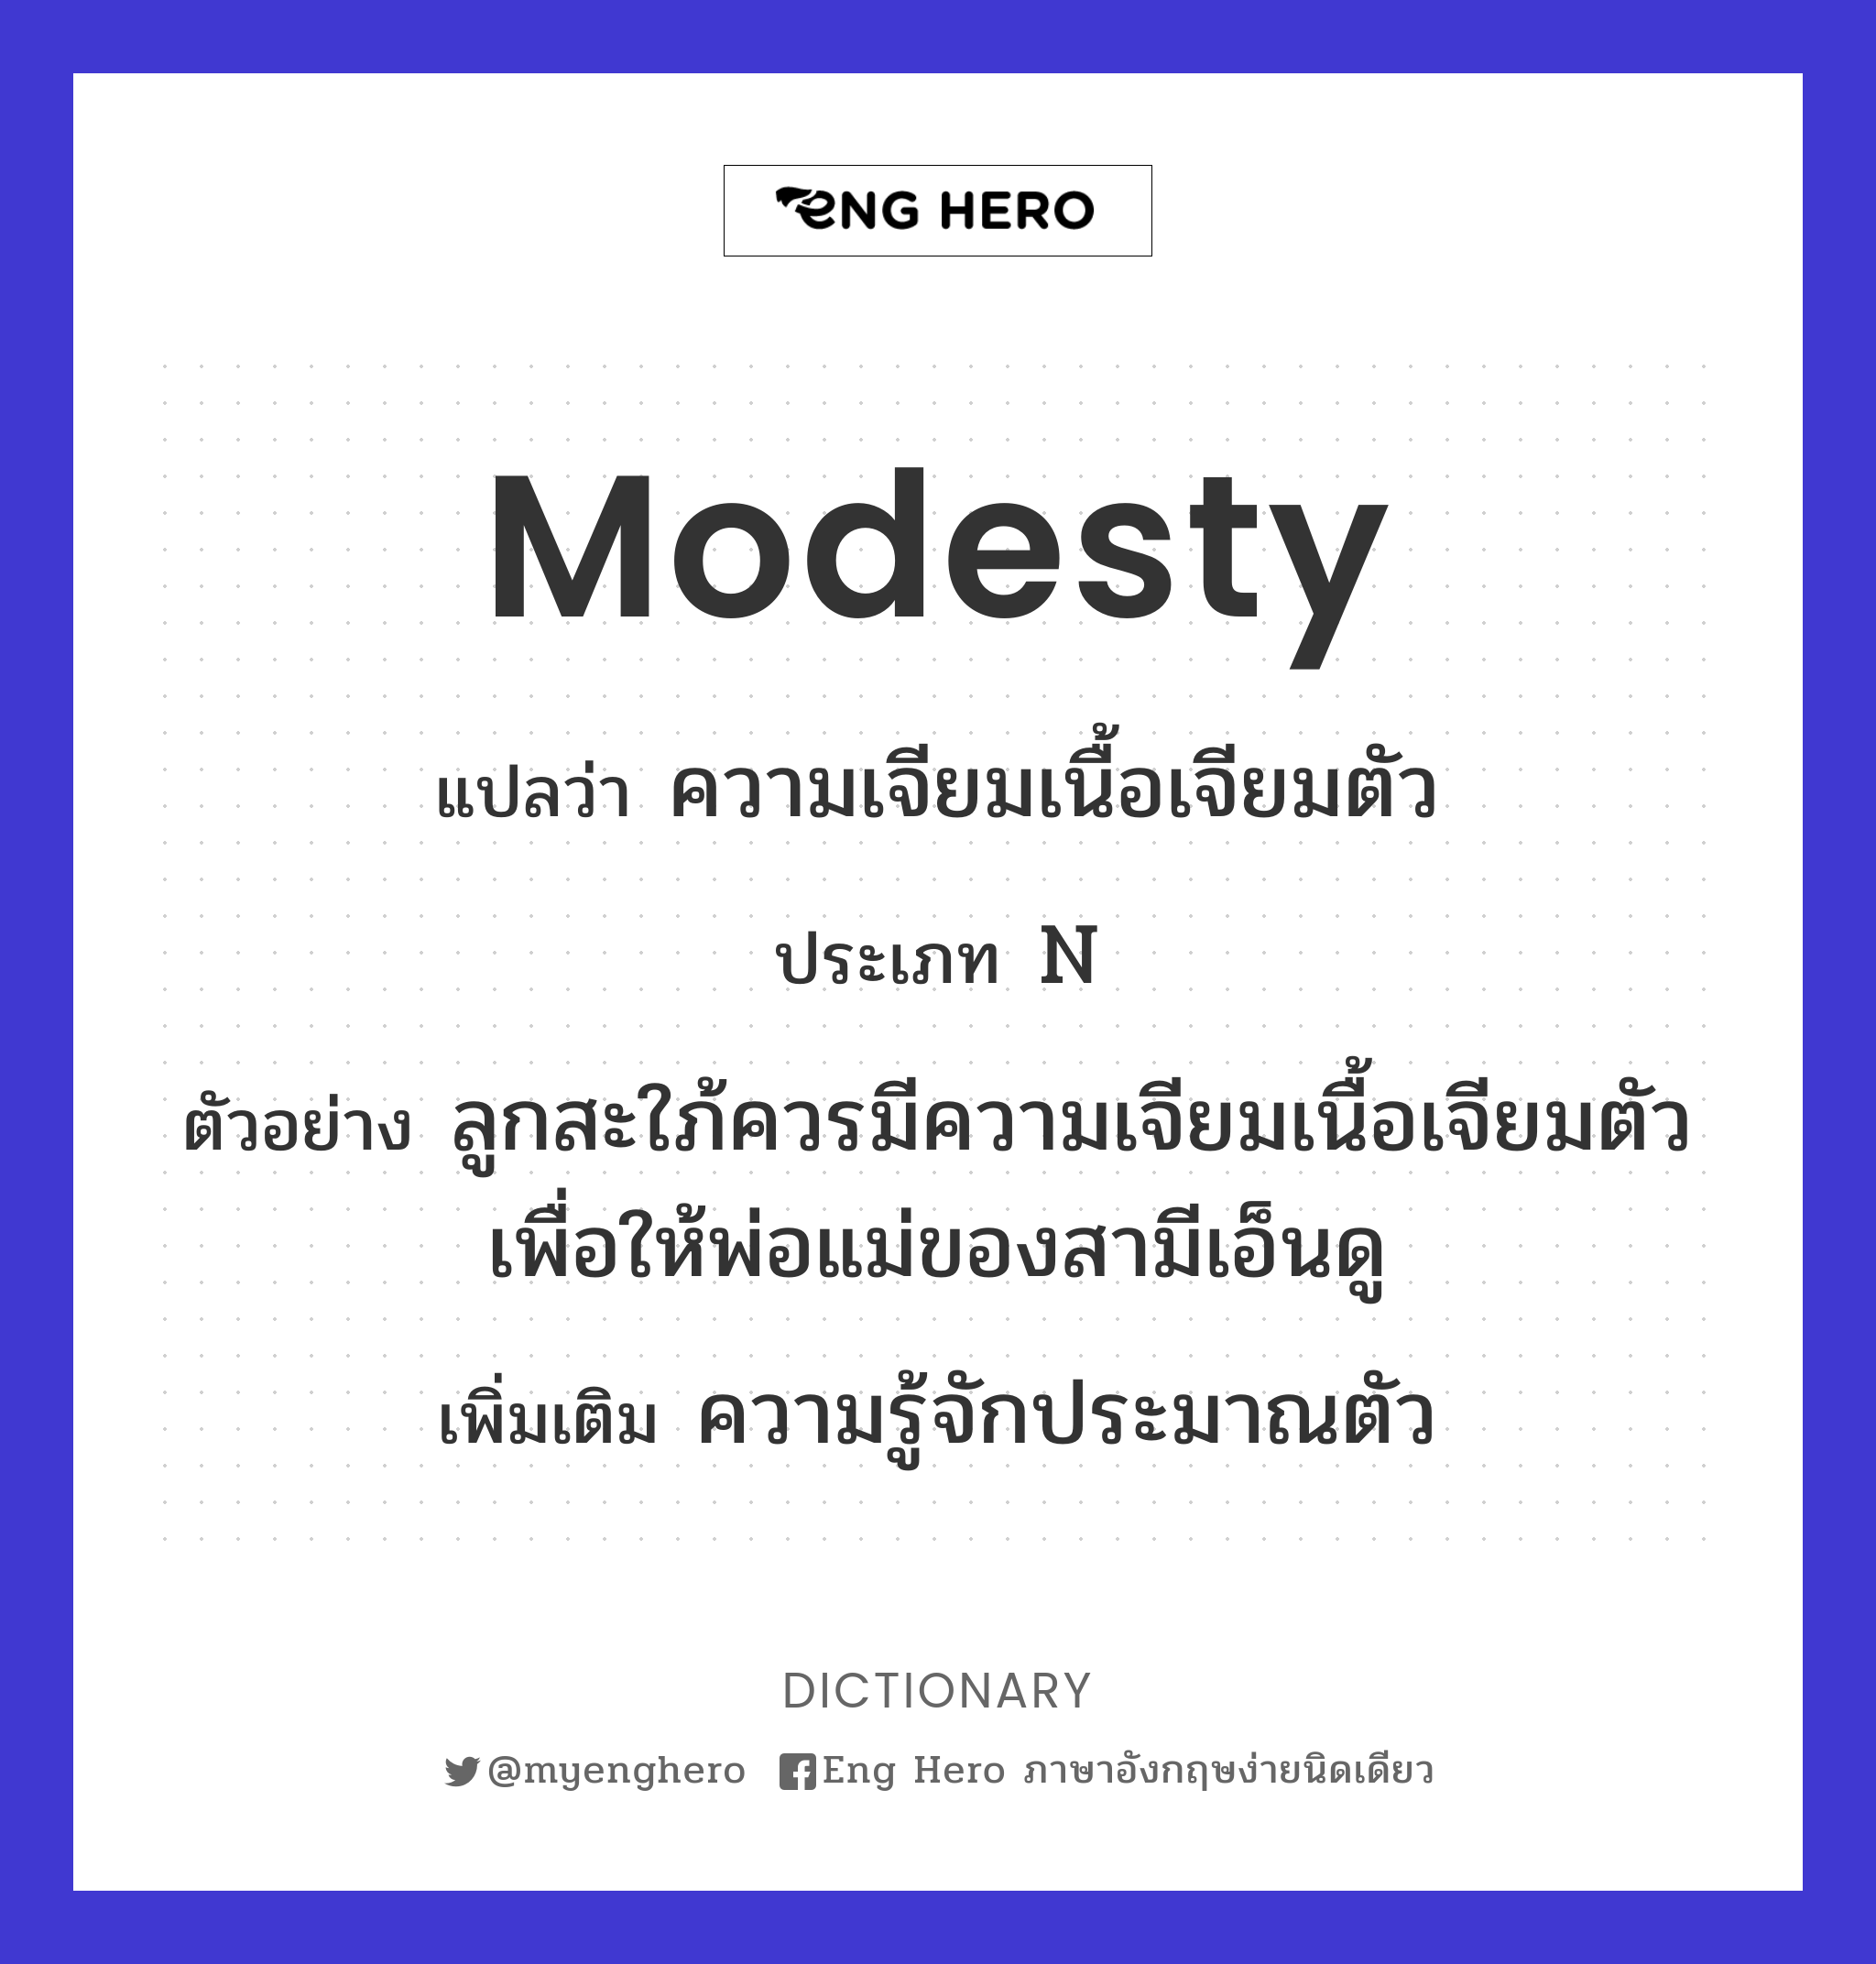 modesty